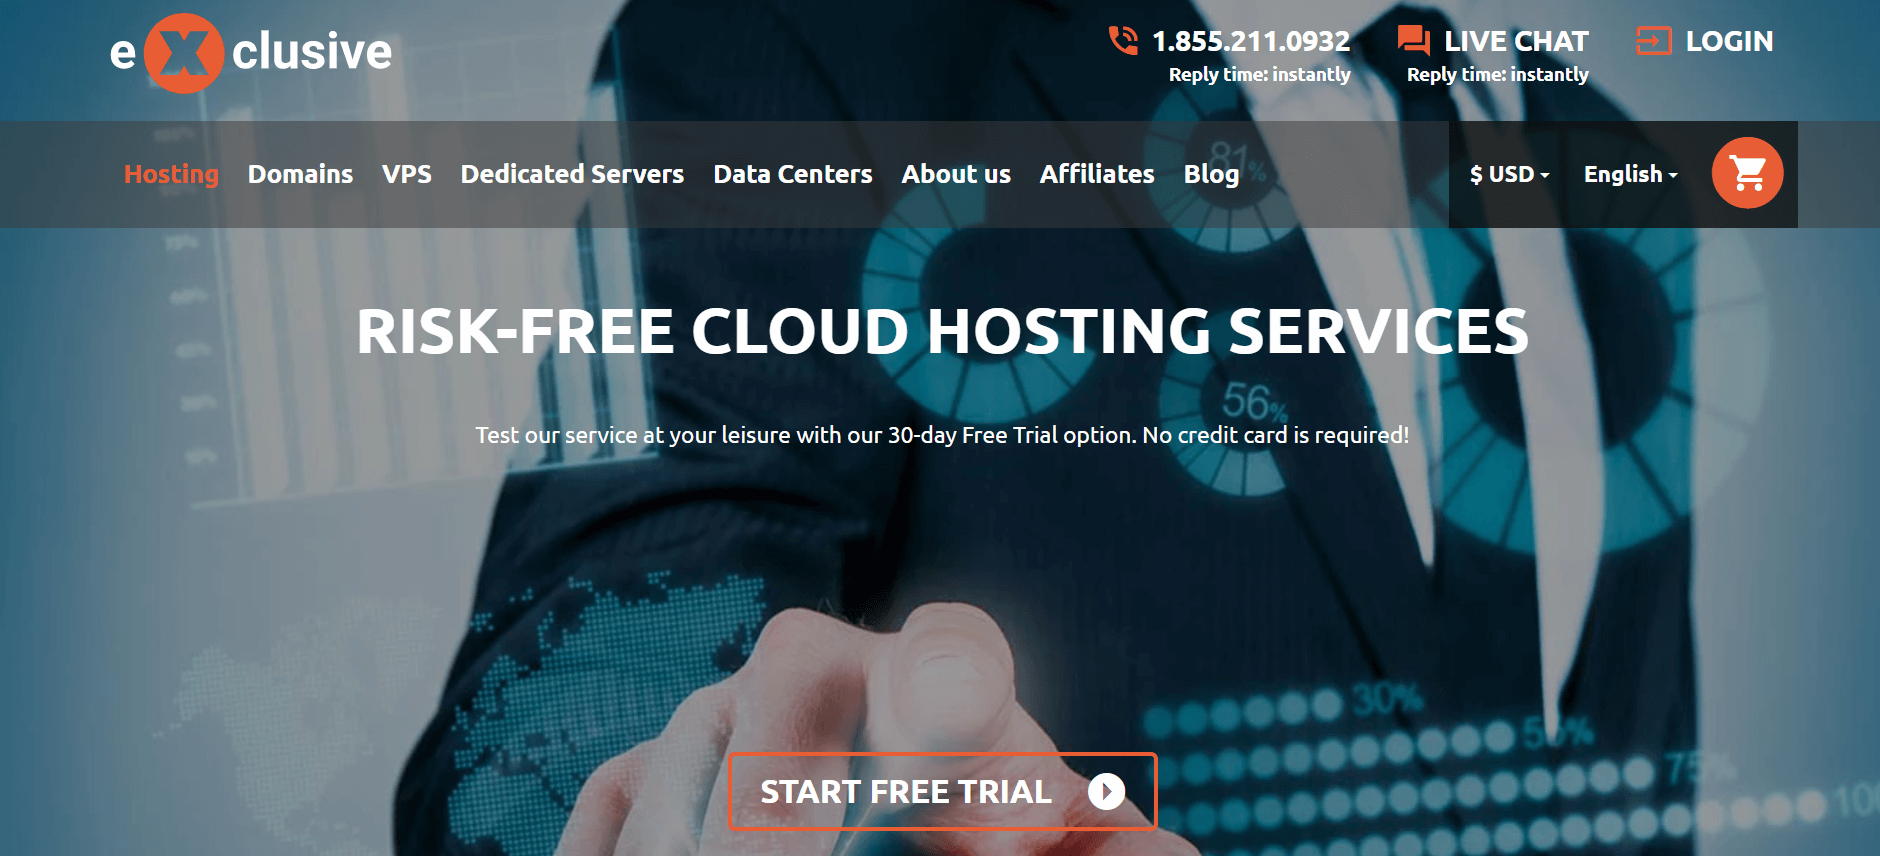 exclusive web hosting free trial